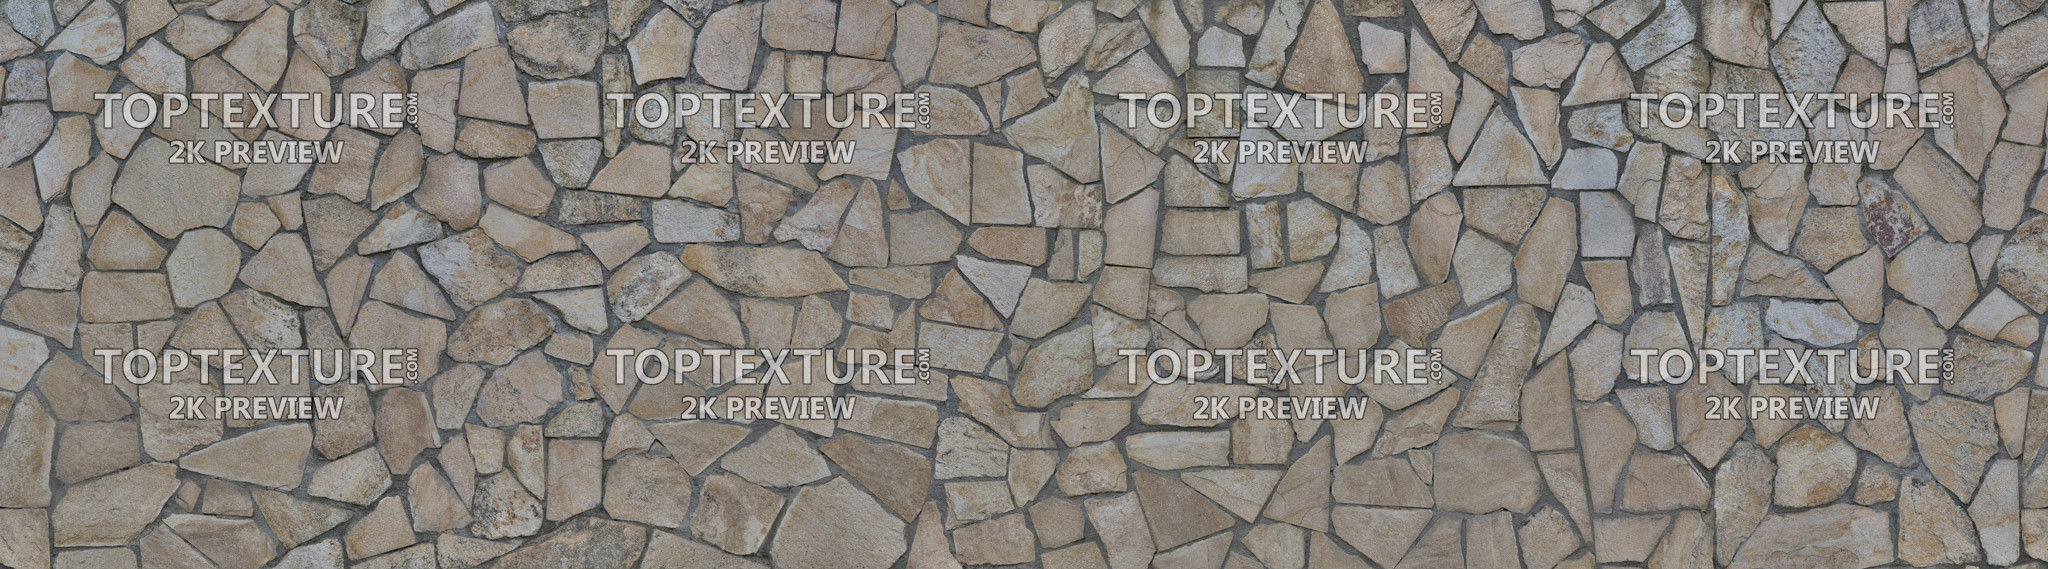 Irregular Stone Tiles - 2K preview